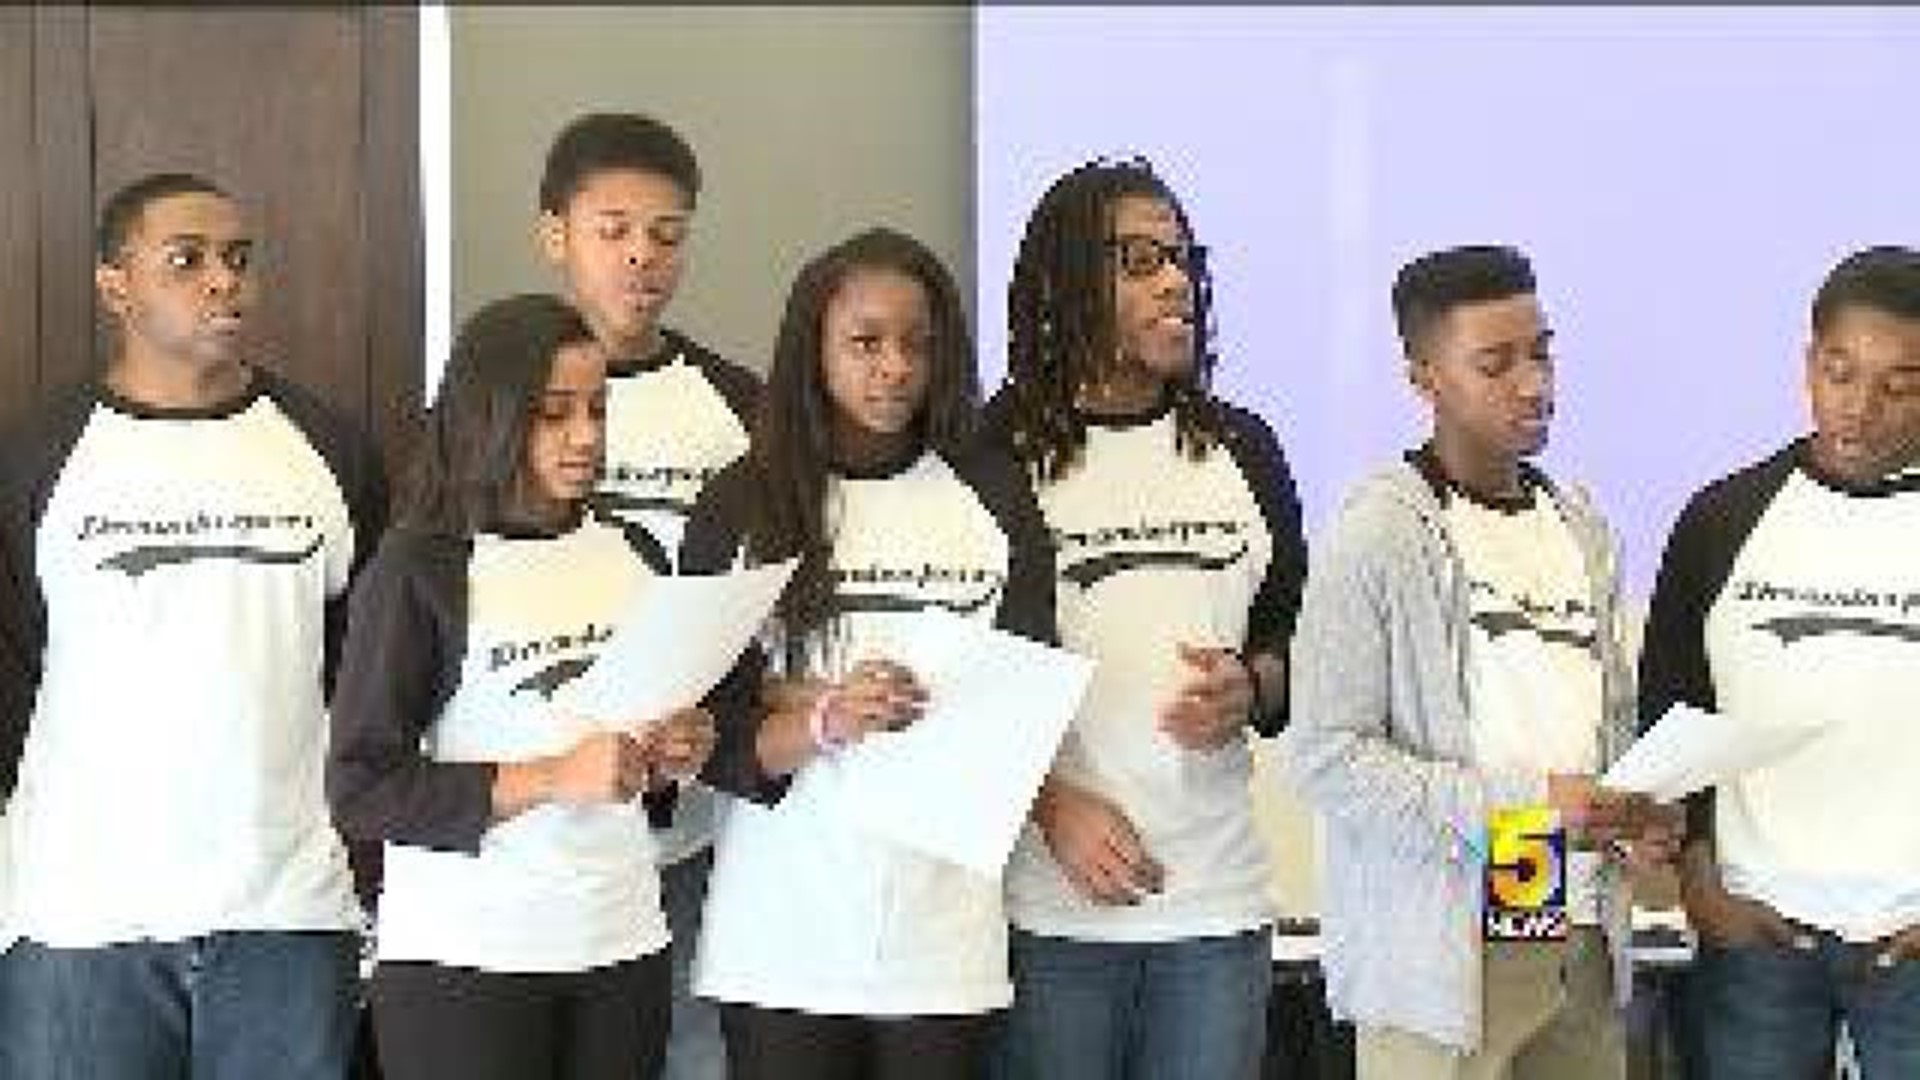 Northwest Arkansas MLK Event Draws Area Youth